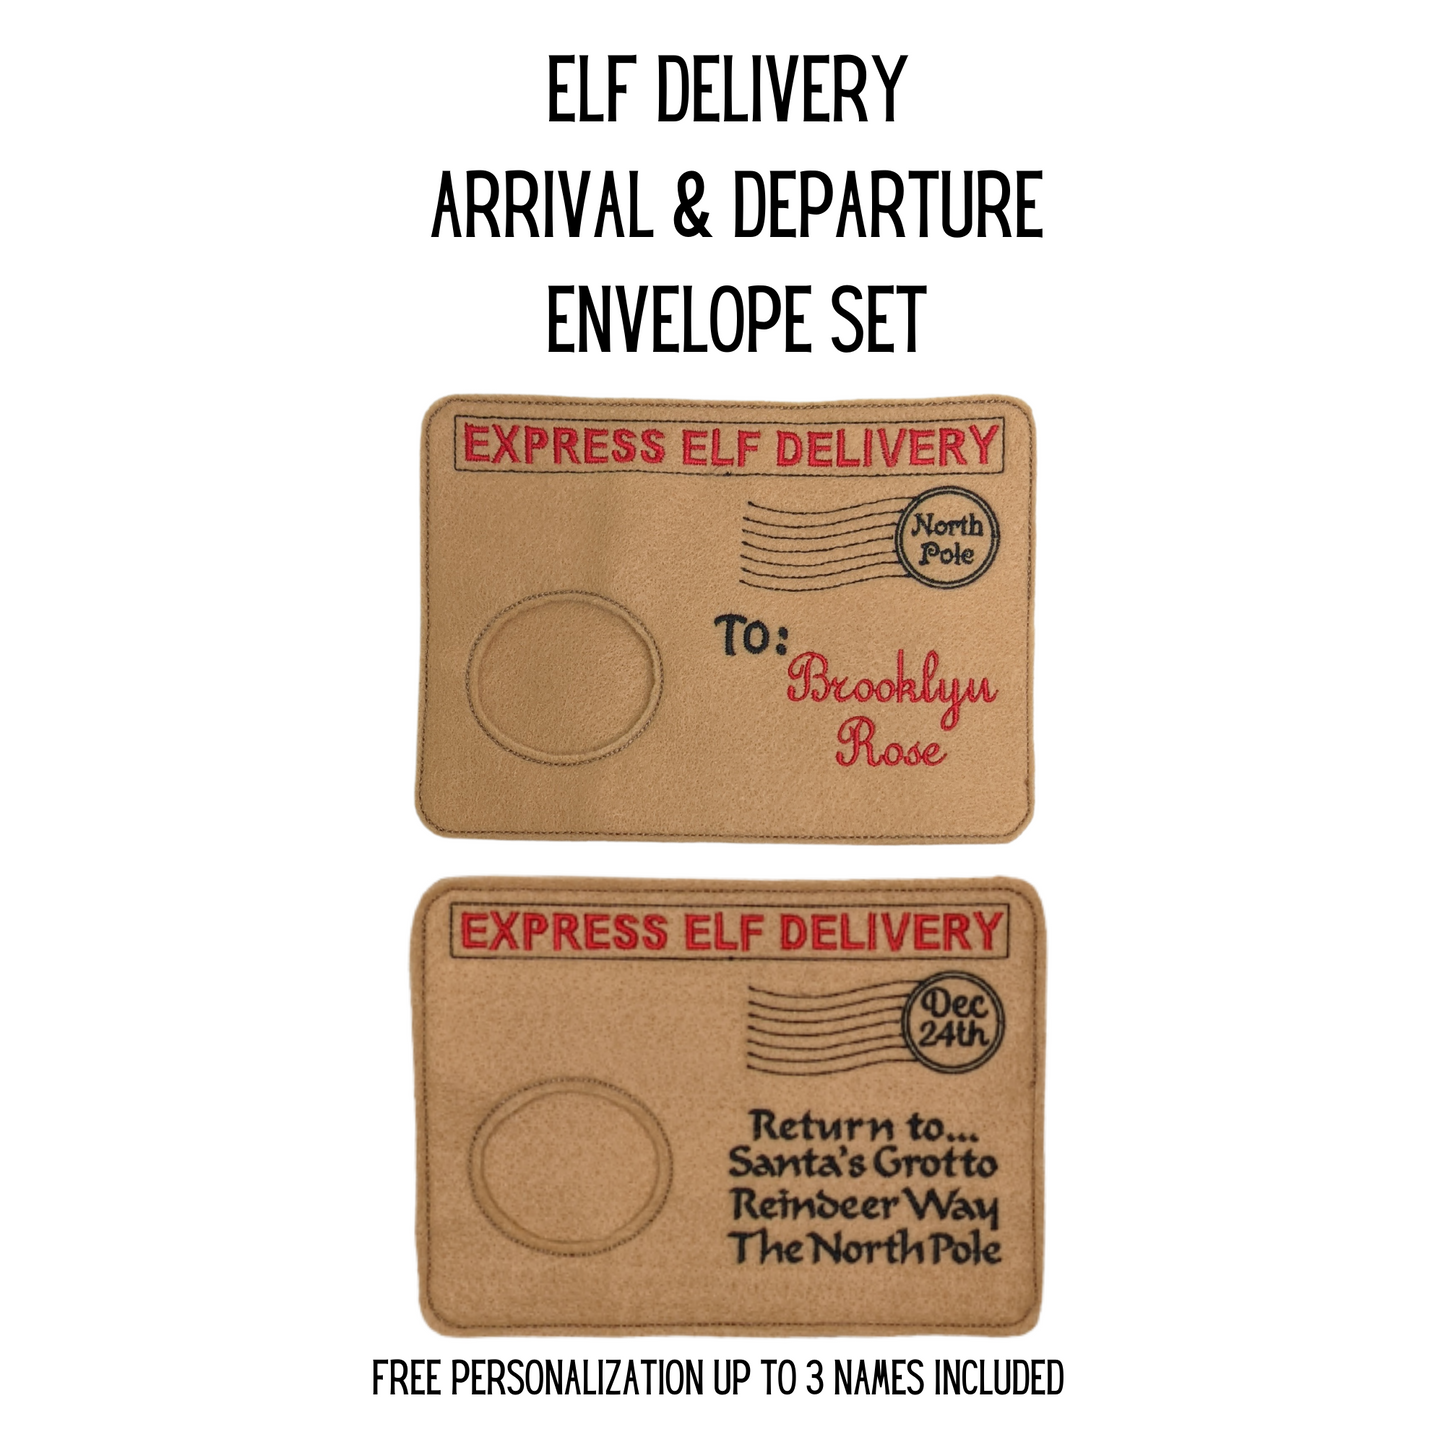 Elf Delivery Arrival and Departure Envelopes